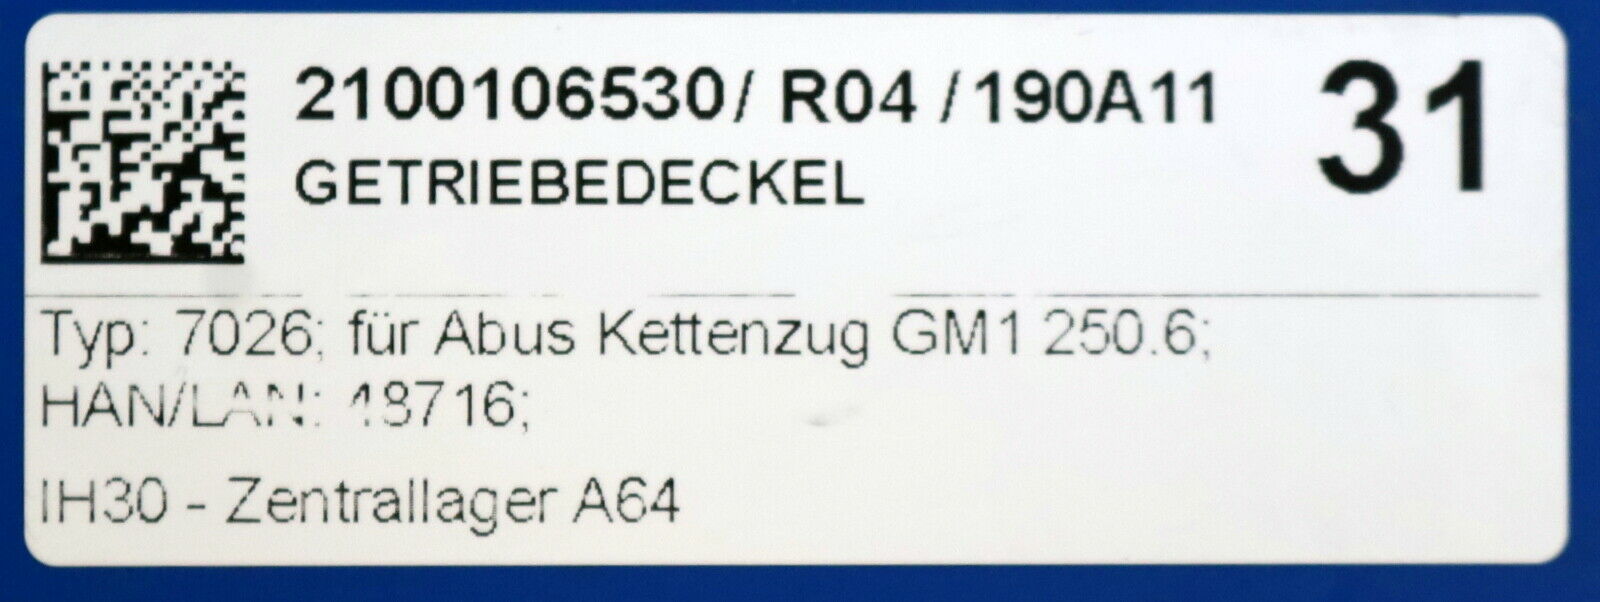 ABUS Getriebedeckel Art.Nr. 7026 Aluminium für ABUS Kettenzug GM1 250.6 unbenutz